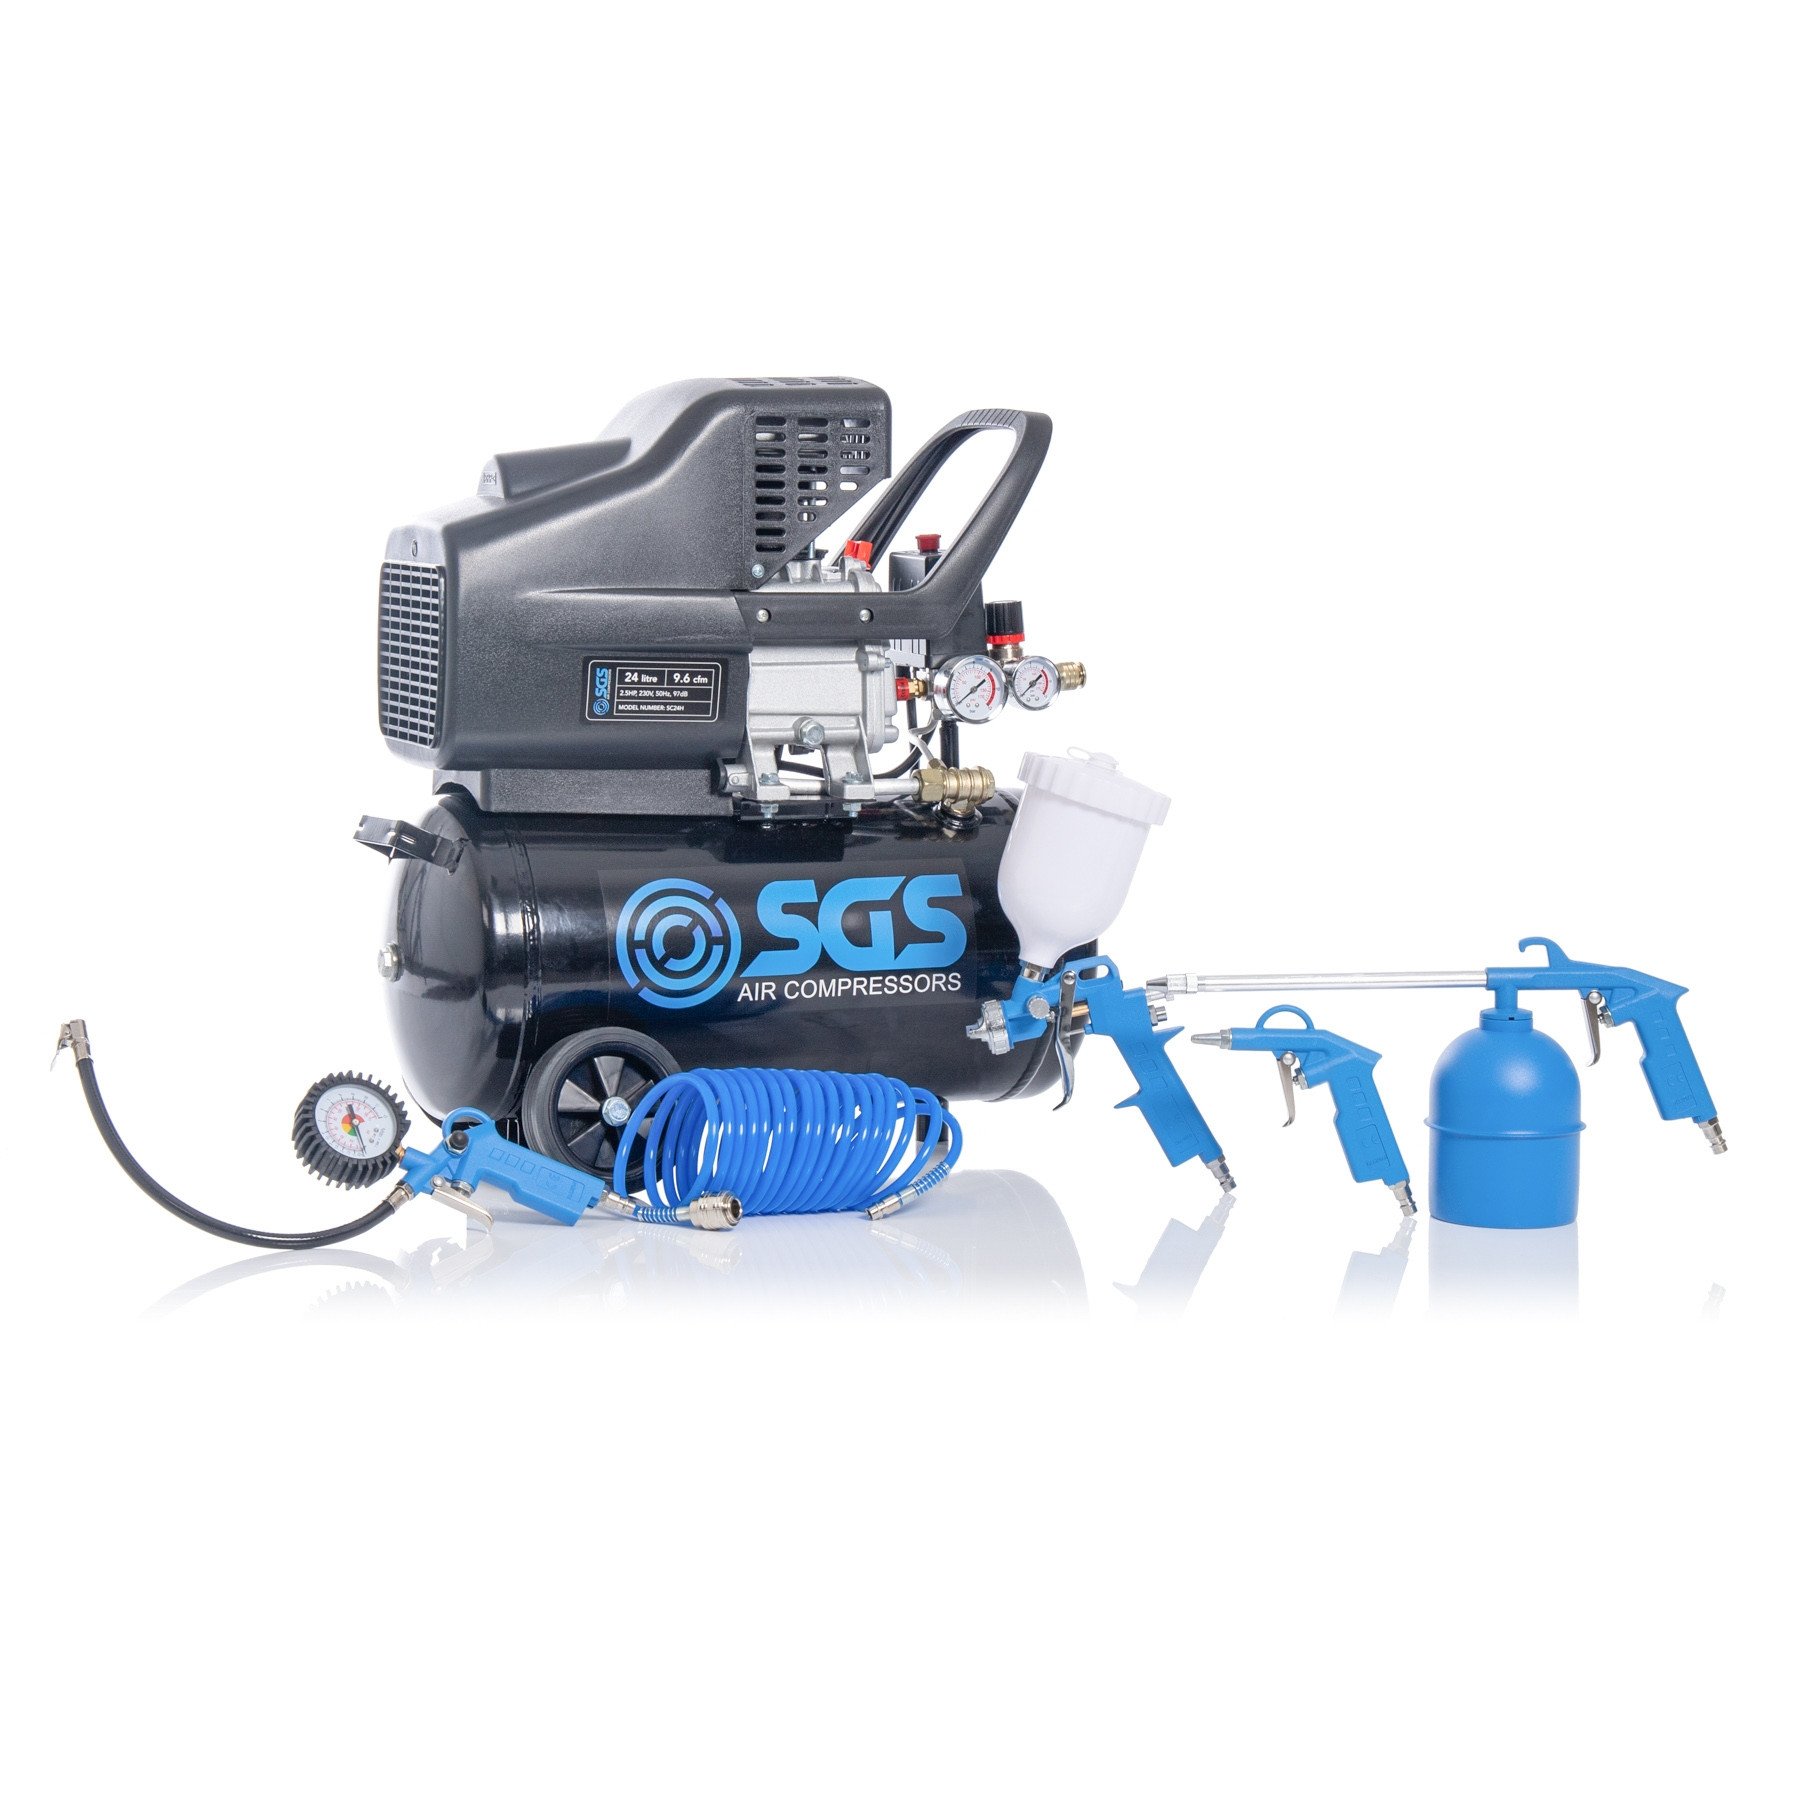 SGS 24升直接驱动空气压缩机和5件工具套件-9.6CFM 2.5HP 24L